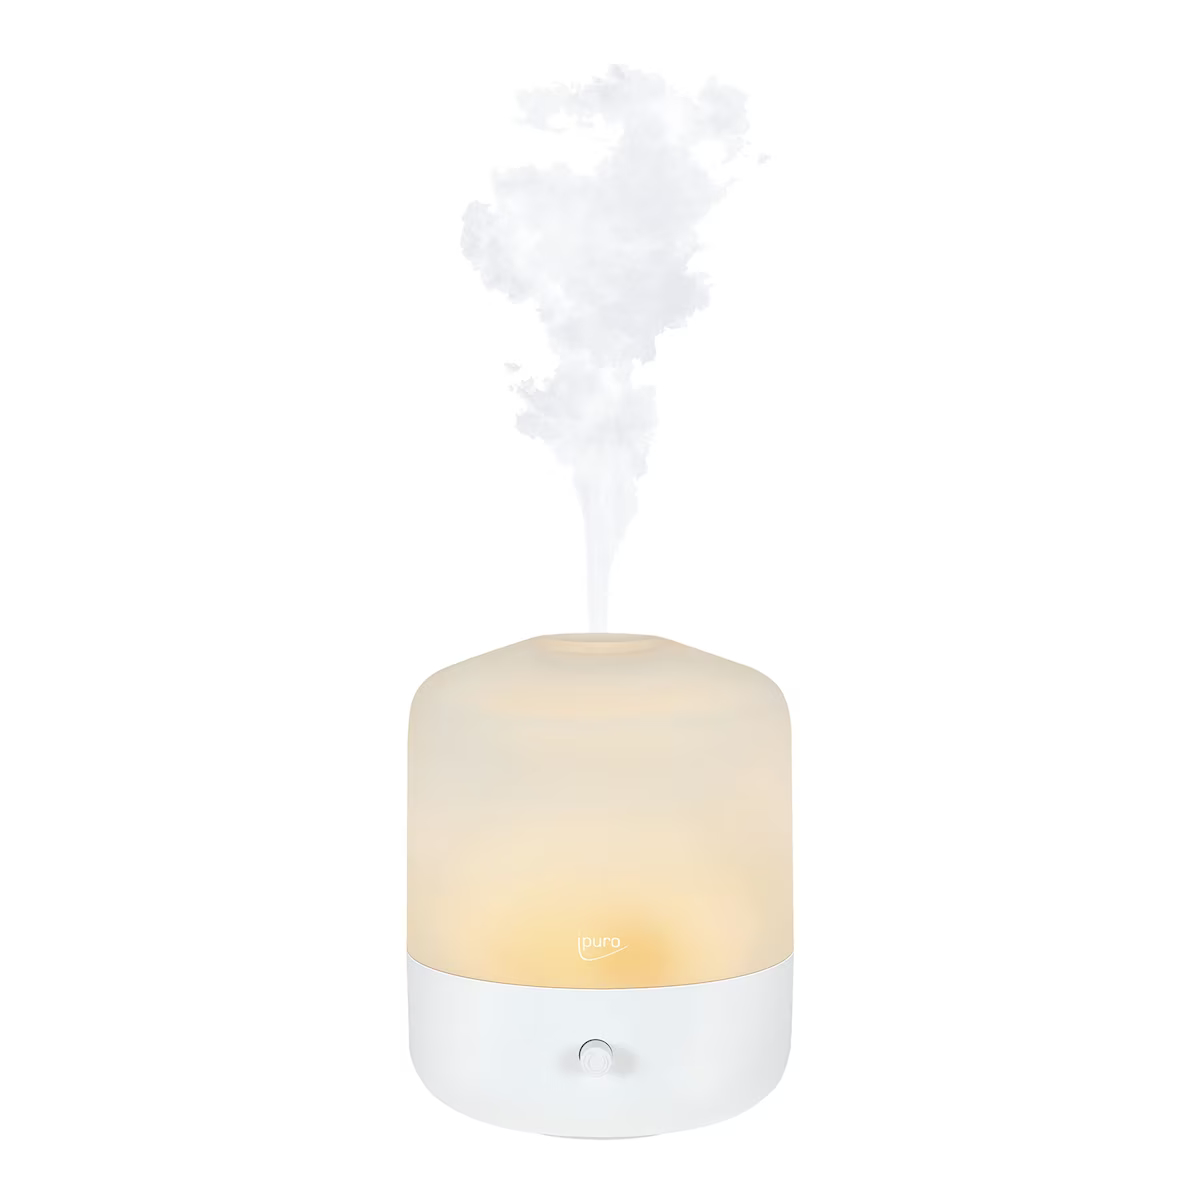 AIR SONIC ipuro aroma mood Electric aroma diffuser – IPURO